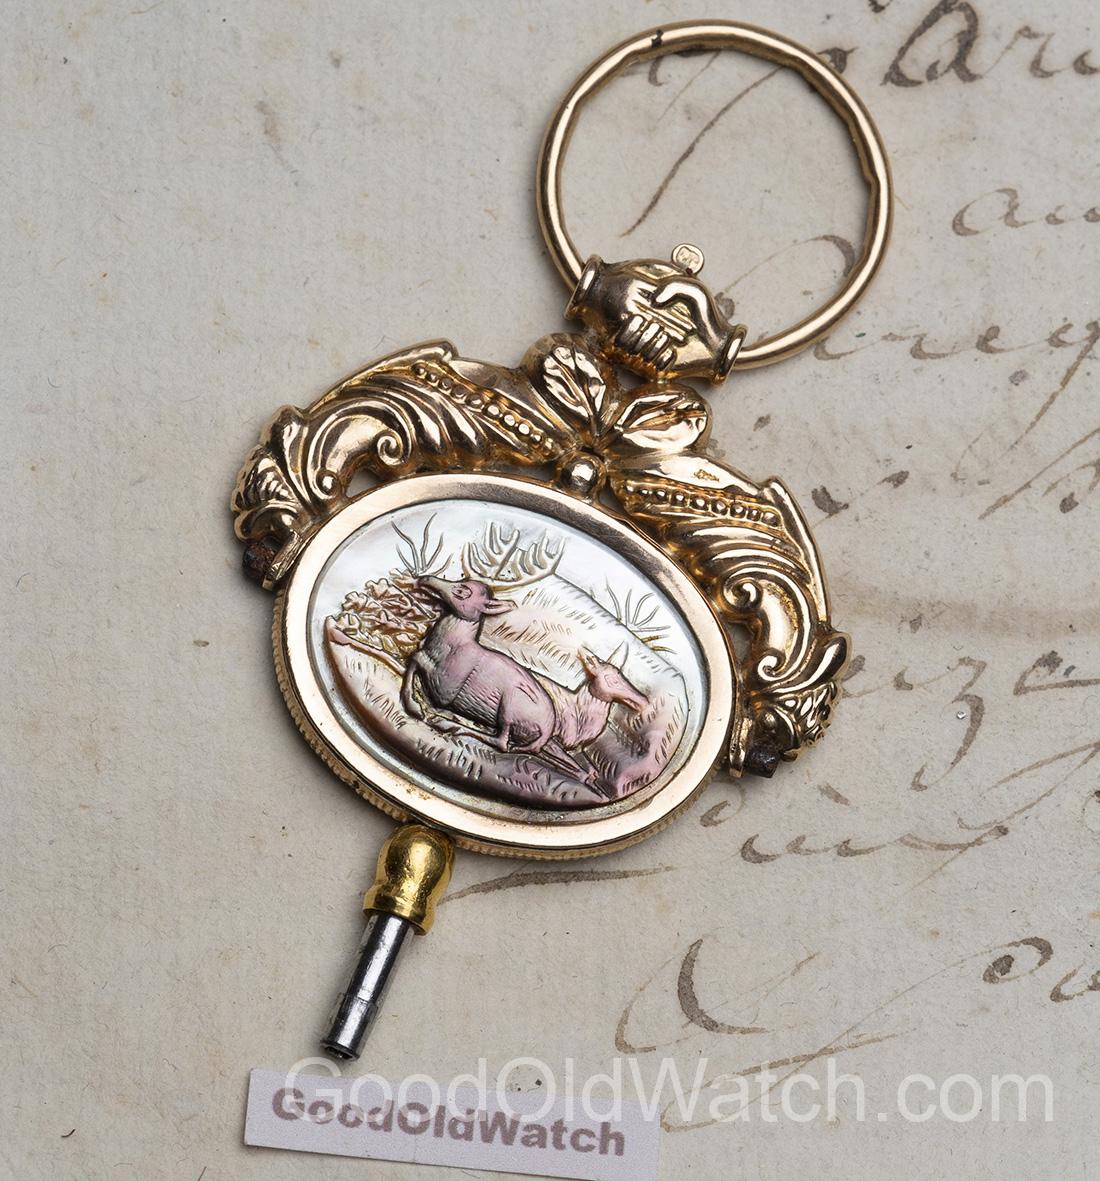 Antique Gold Cameo Pocket Watch key